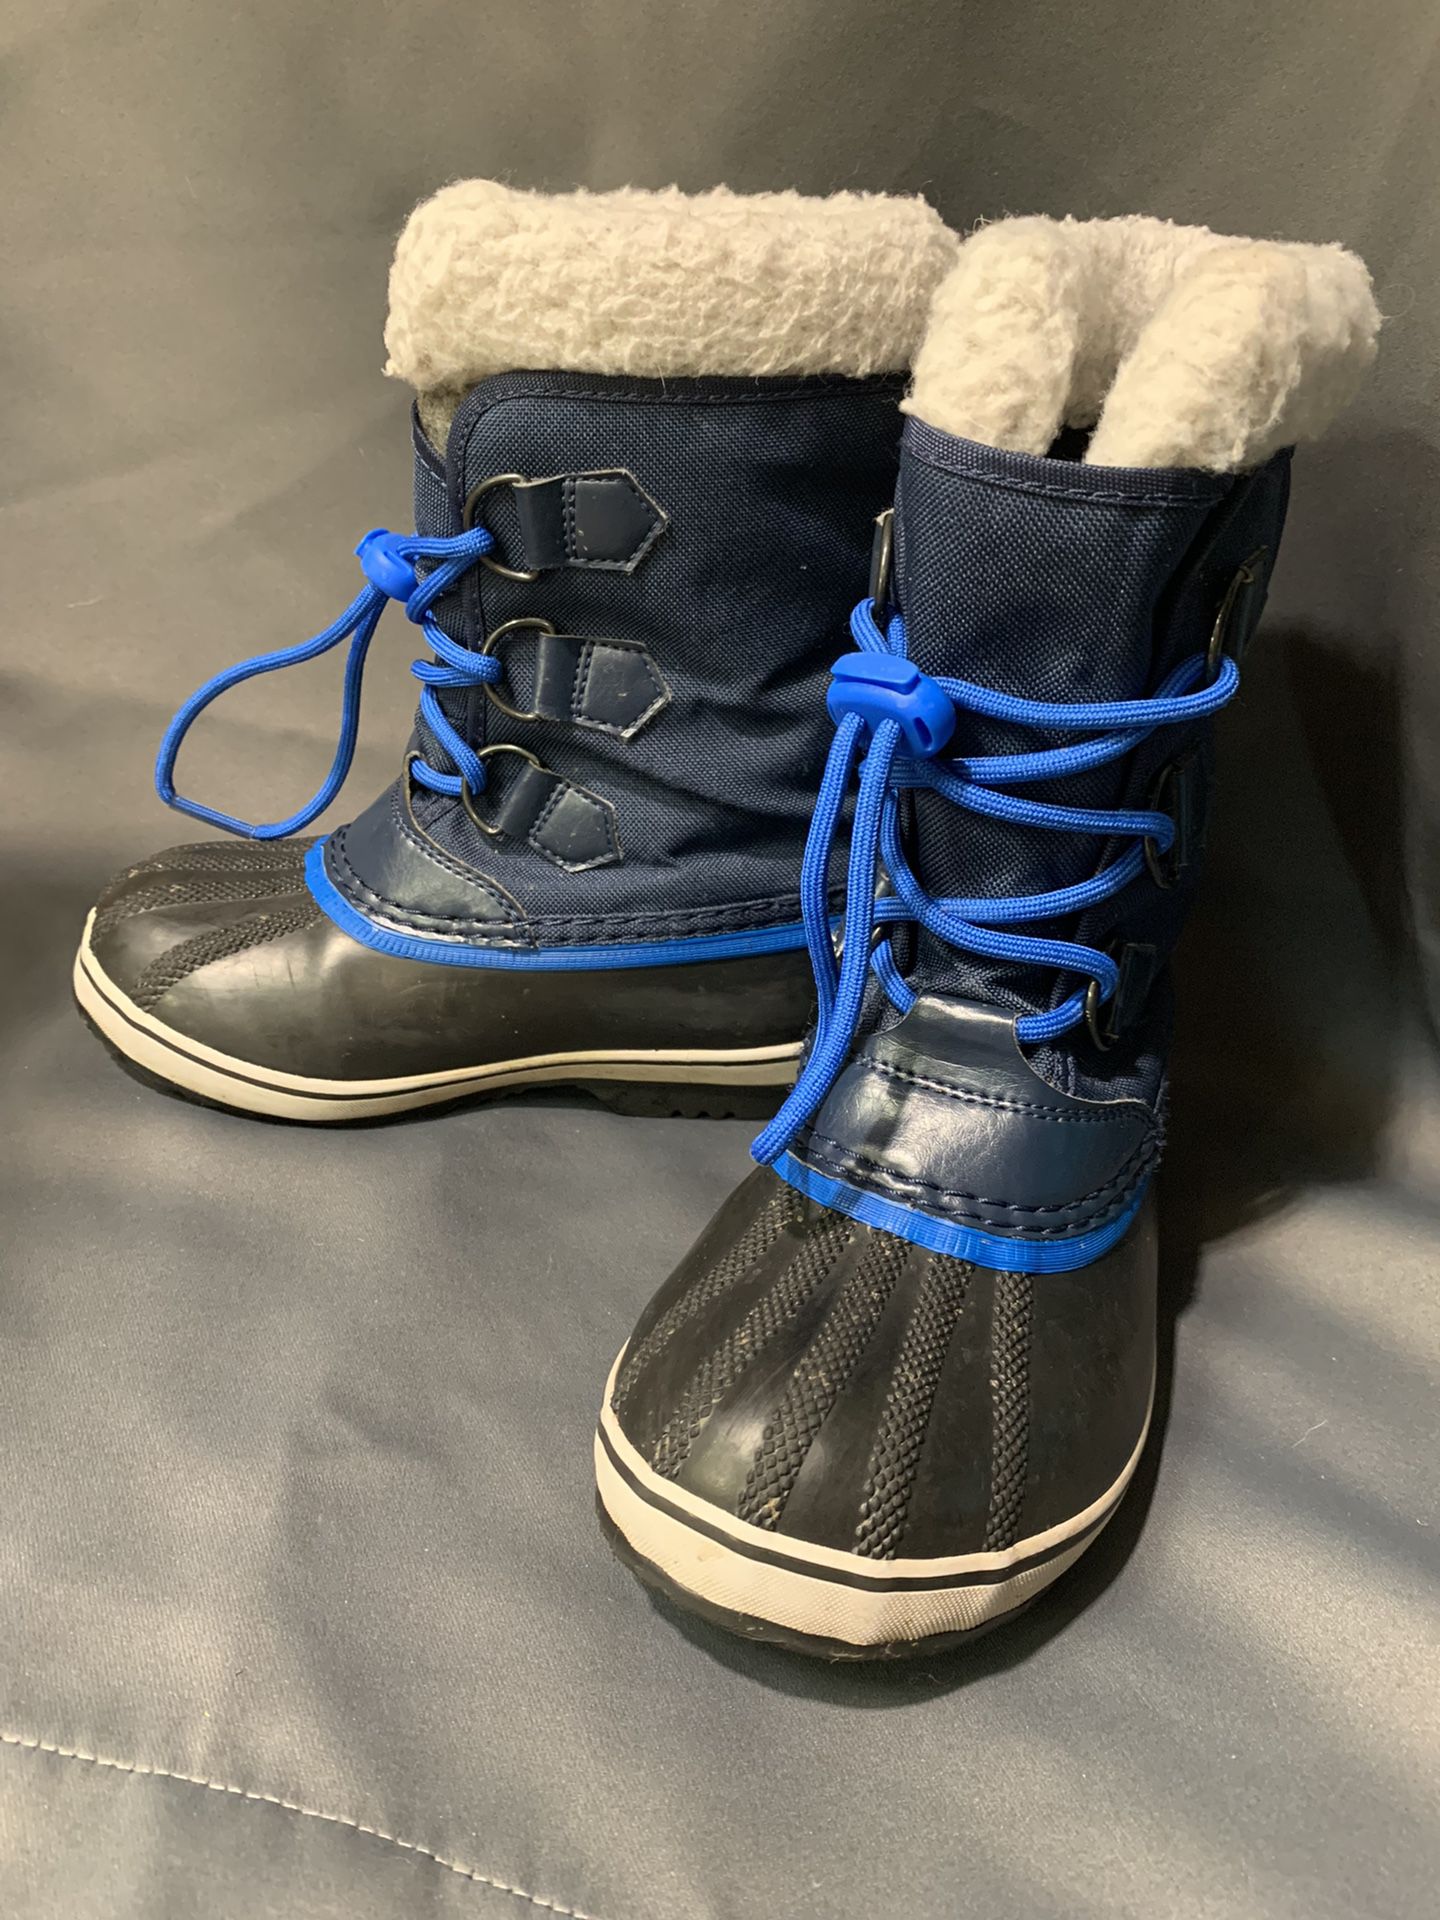 Sorel Snow boots size 1